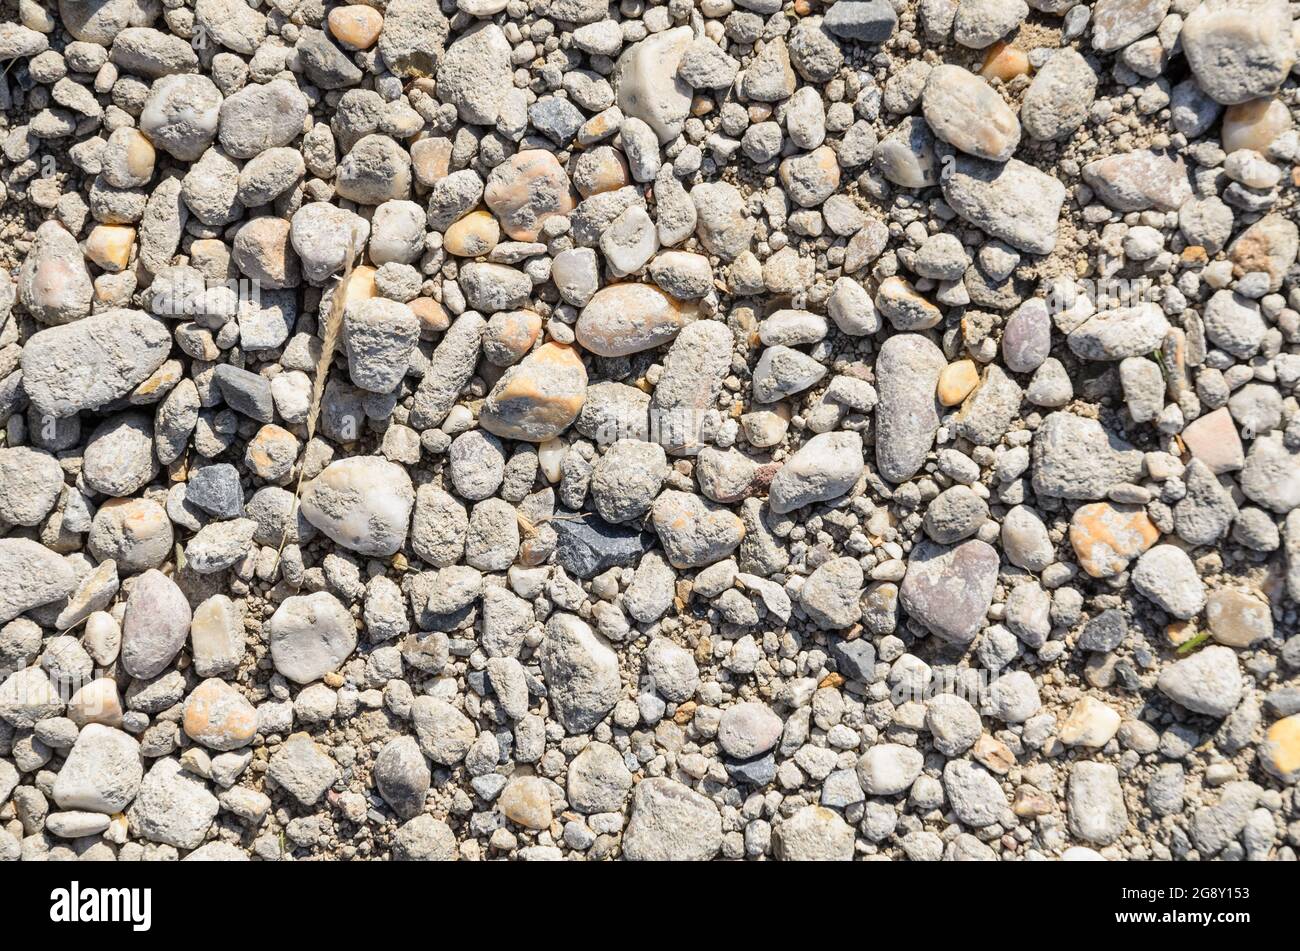 Small grey pebble stones on the ground Stock Photo